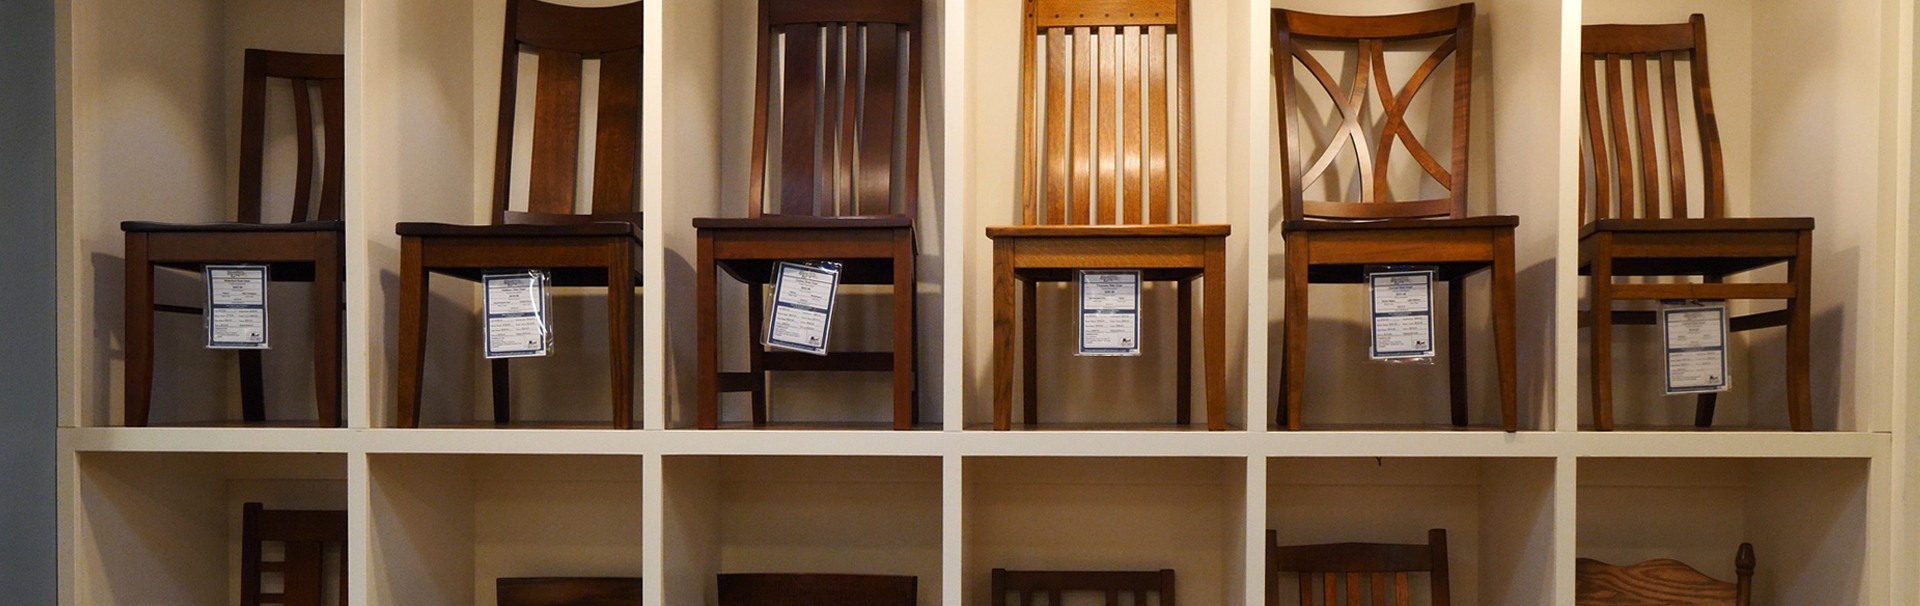 Handmade wooden chairs